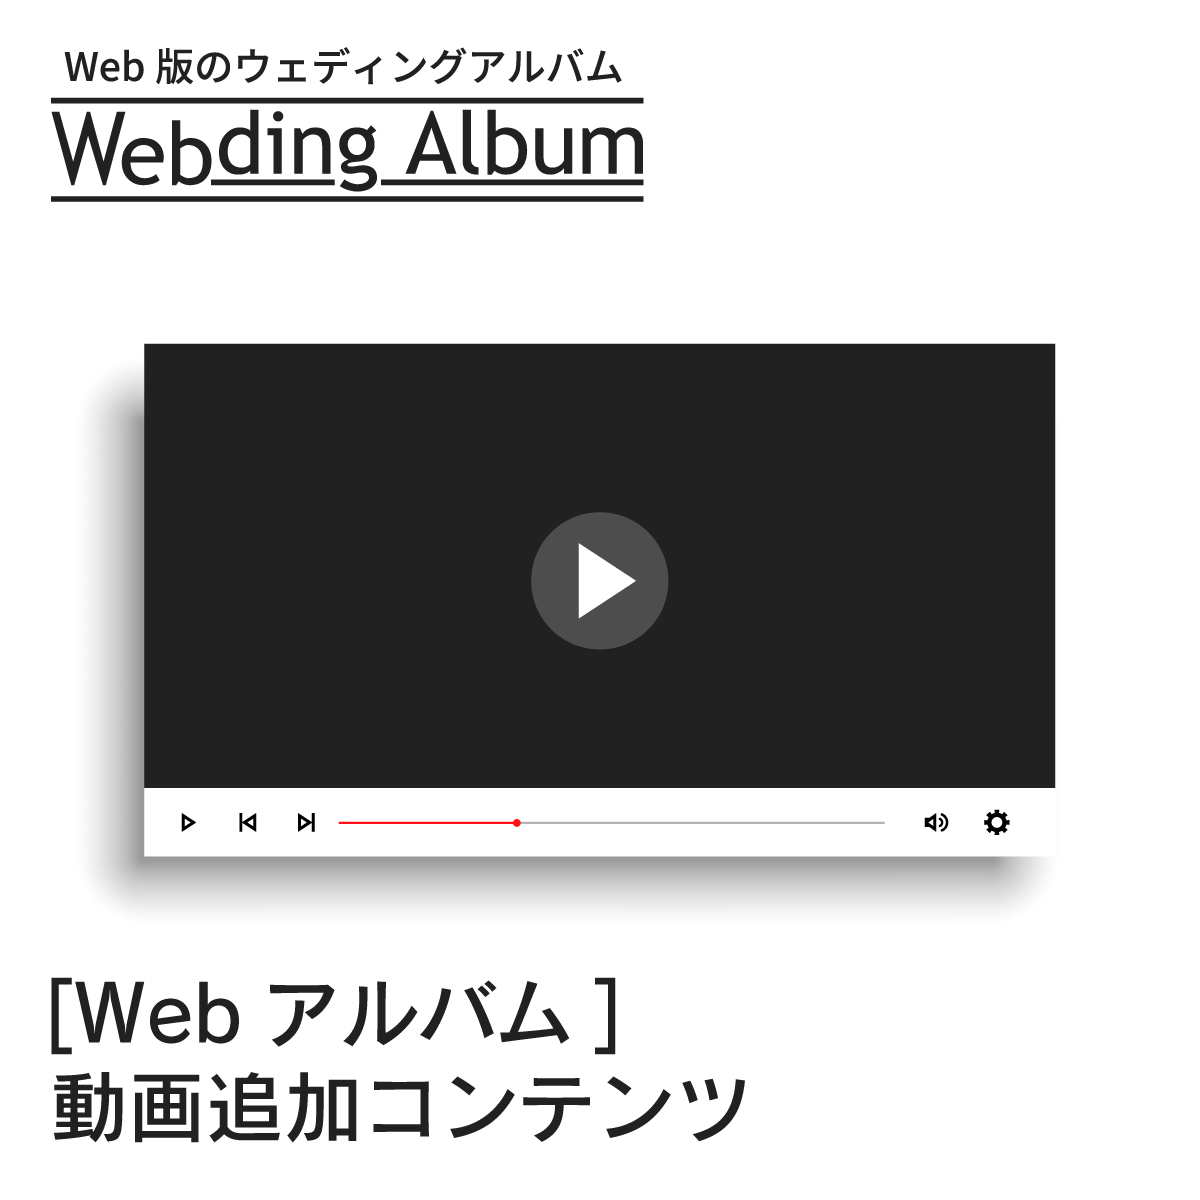 Webding Albumの動画追加コンテンツ